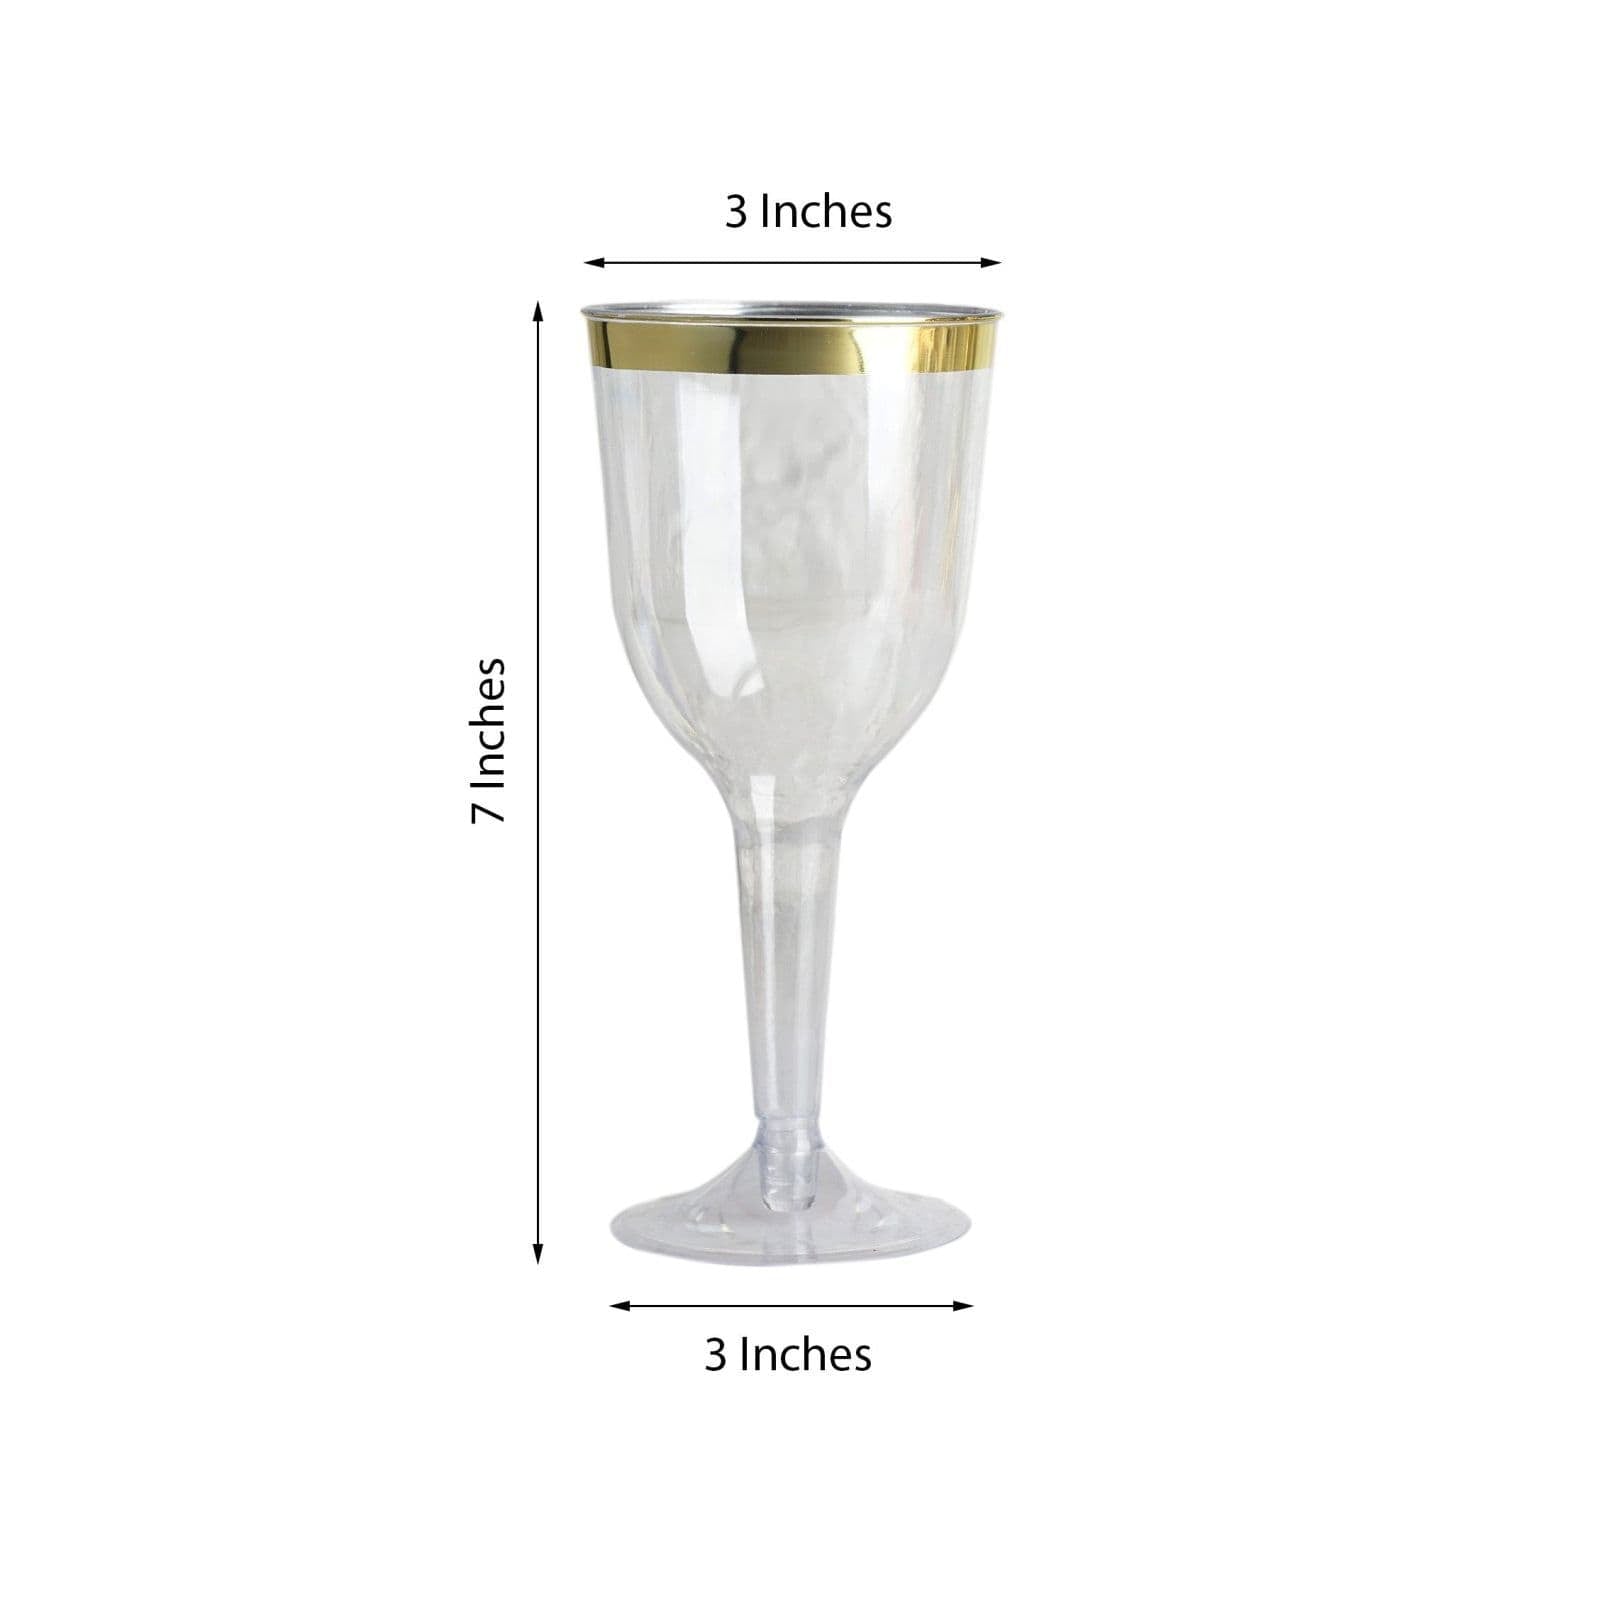 12 pcs 6 oz. Clear with Gold Rim Disposable Plastic Party Champagne Flutes Glasses